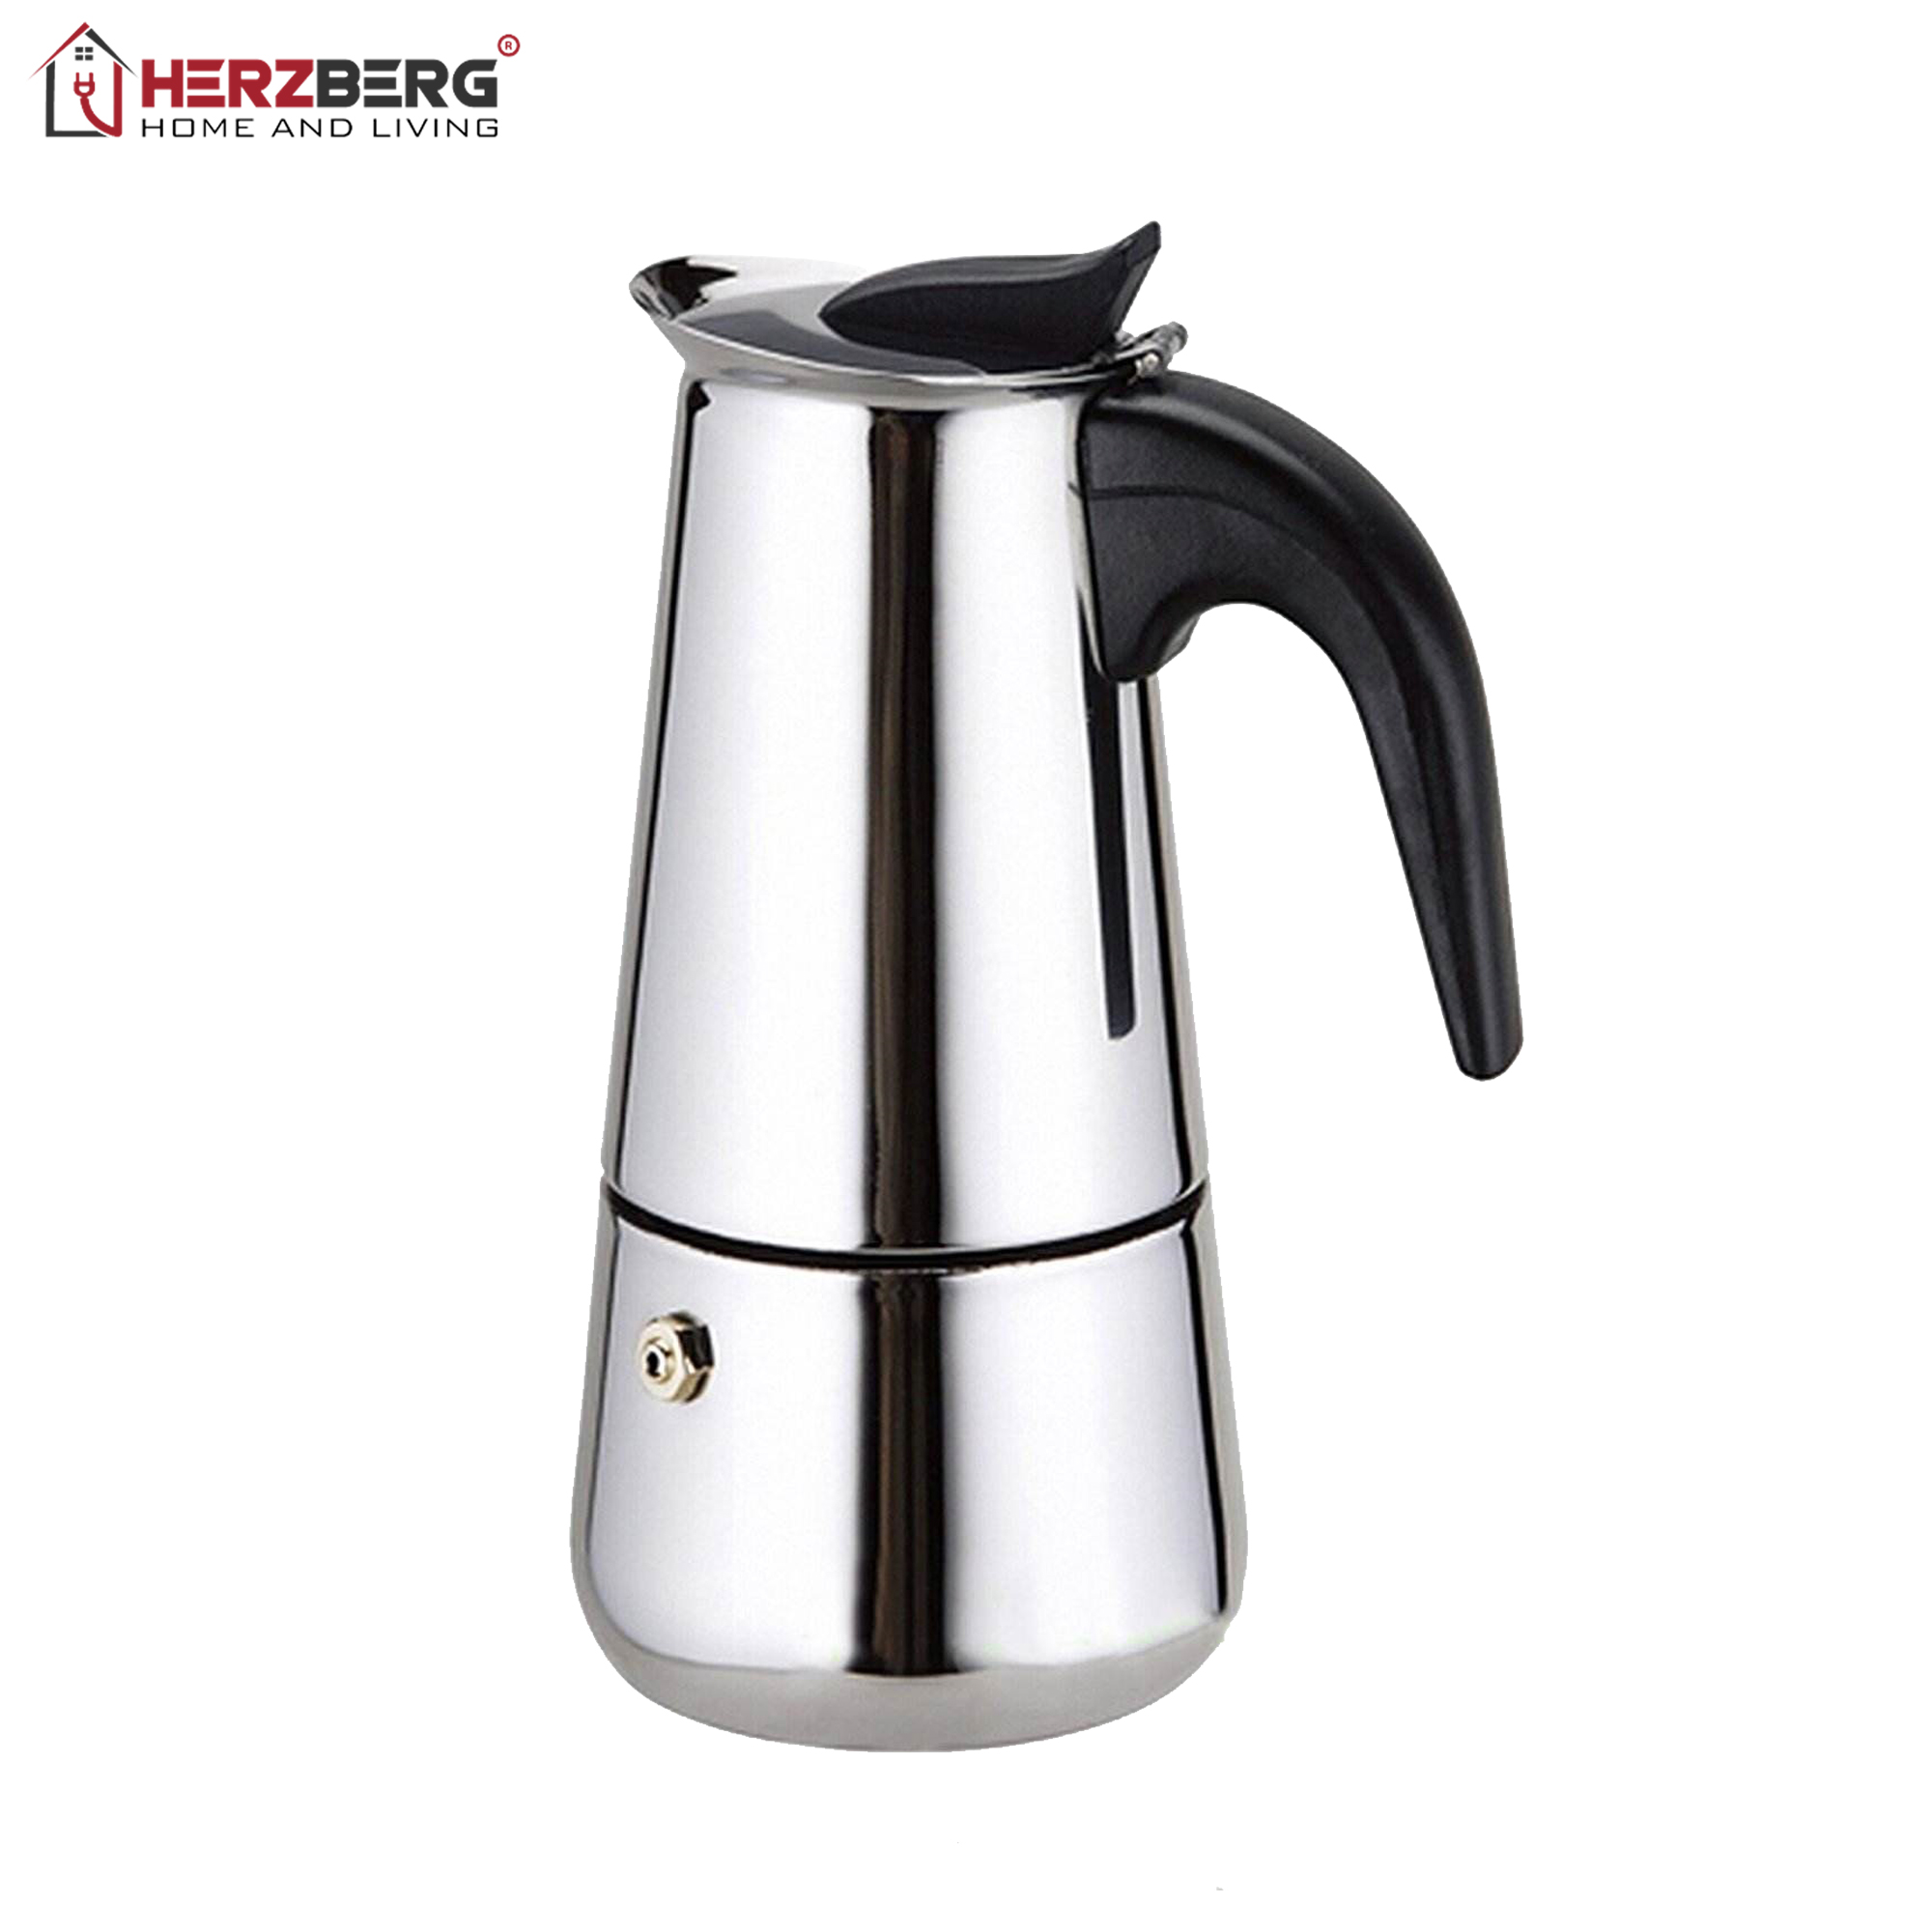 Herzberg HG-5024: 9 Cups Espresso Maker